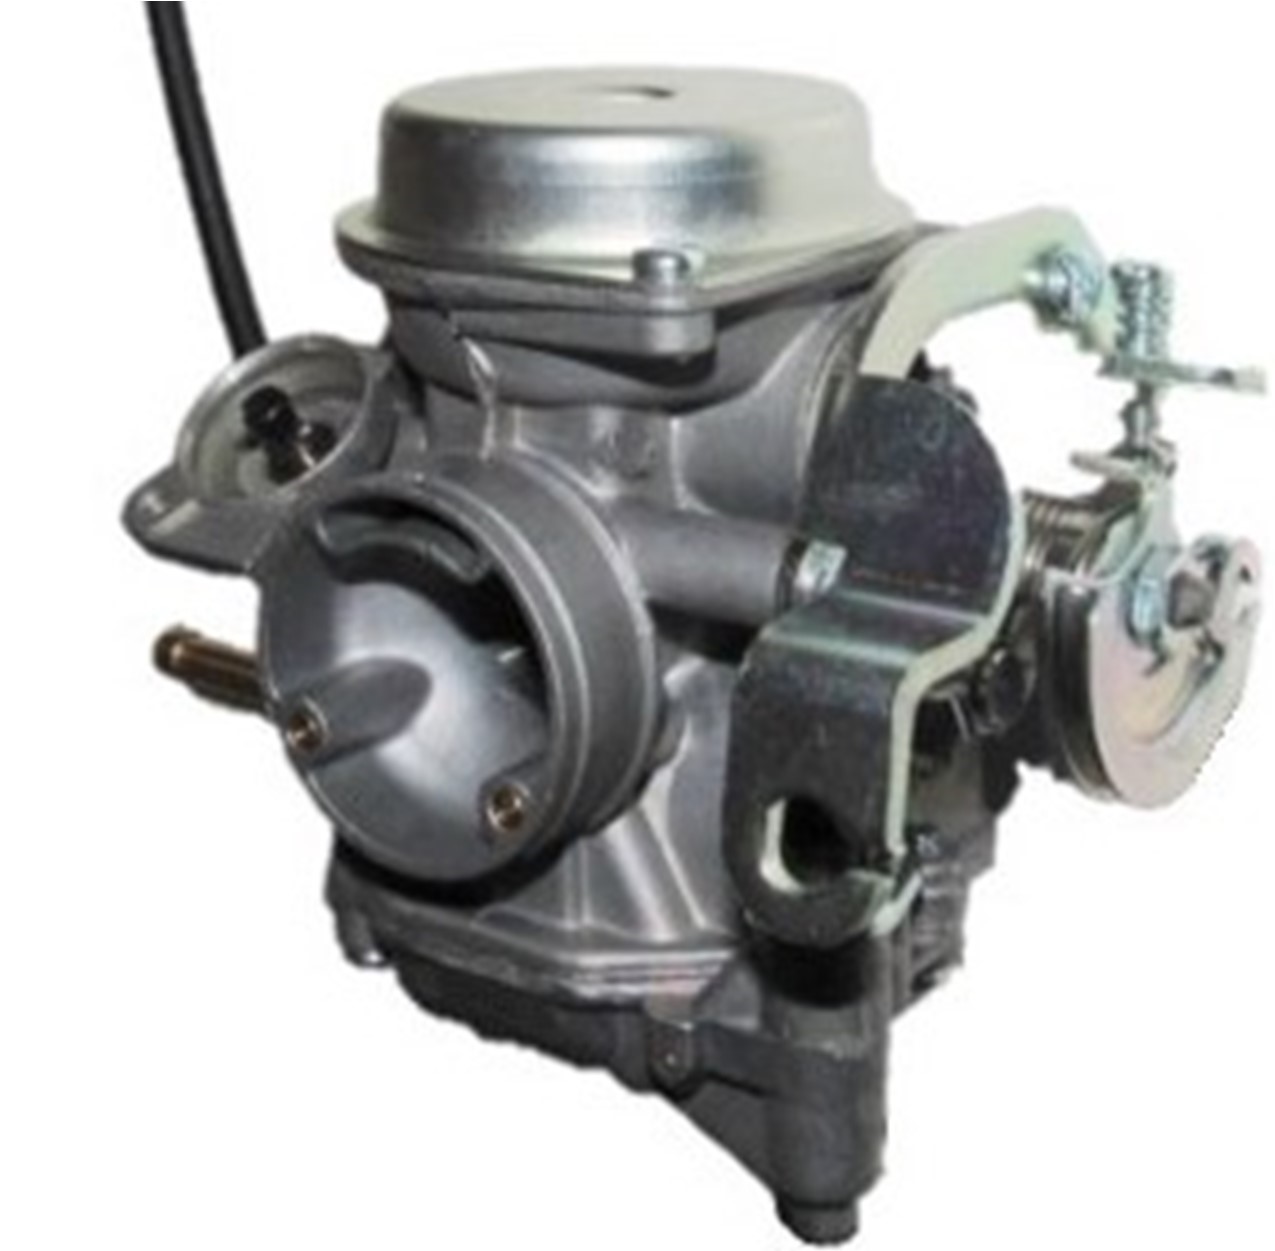 TK Carburetor Fits E-Ton Viper RXL70, RX4-70, RXL90, RX4-90R, ATVs & Rover UK1, Rover GT UK2 UTVs 2007-2013 & Yamaha Raptor 90 2009-2013 ATVs (Manual Choke)